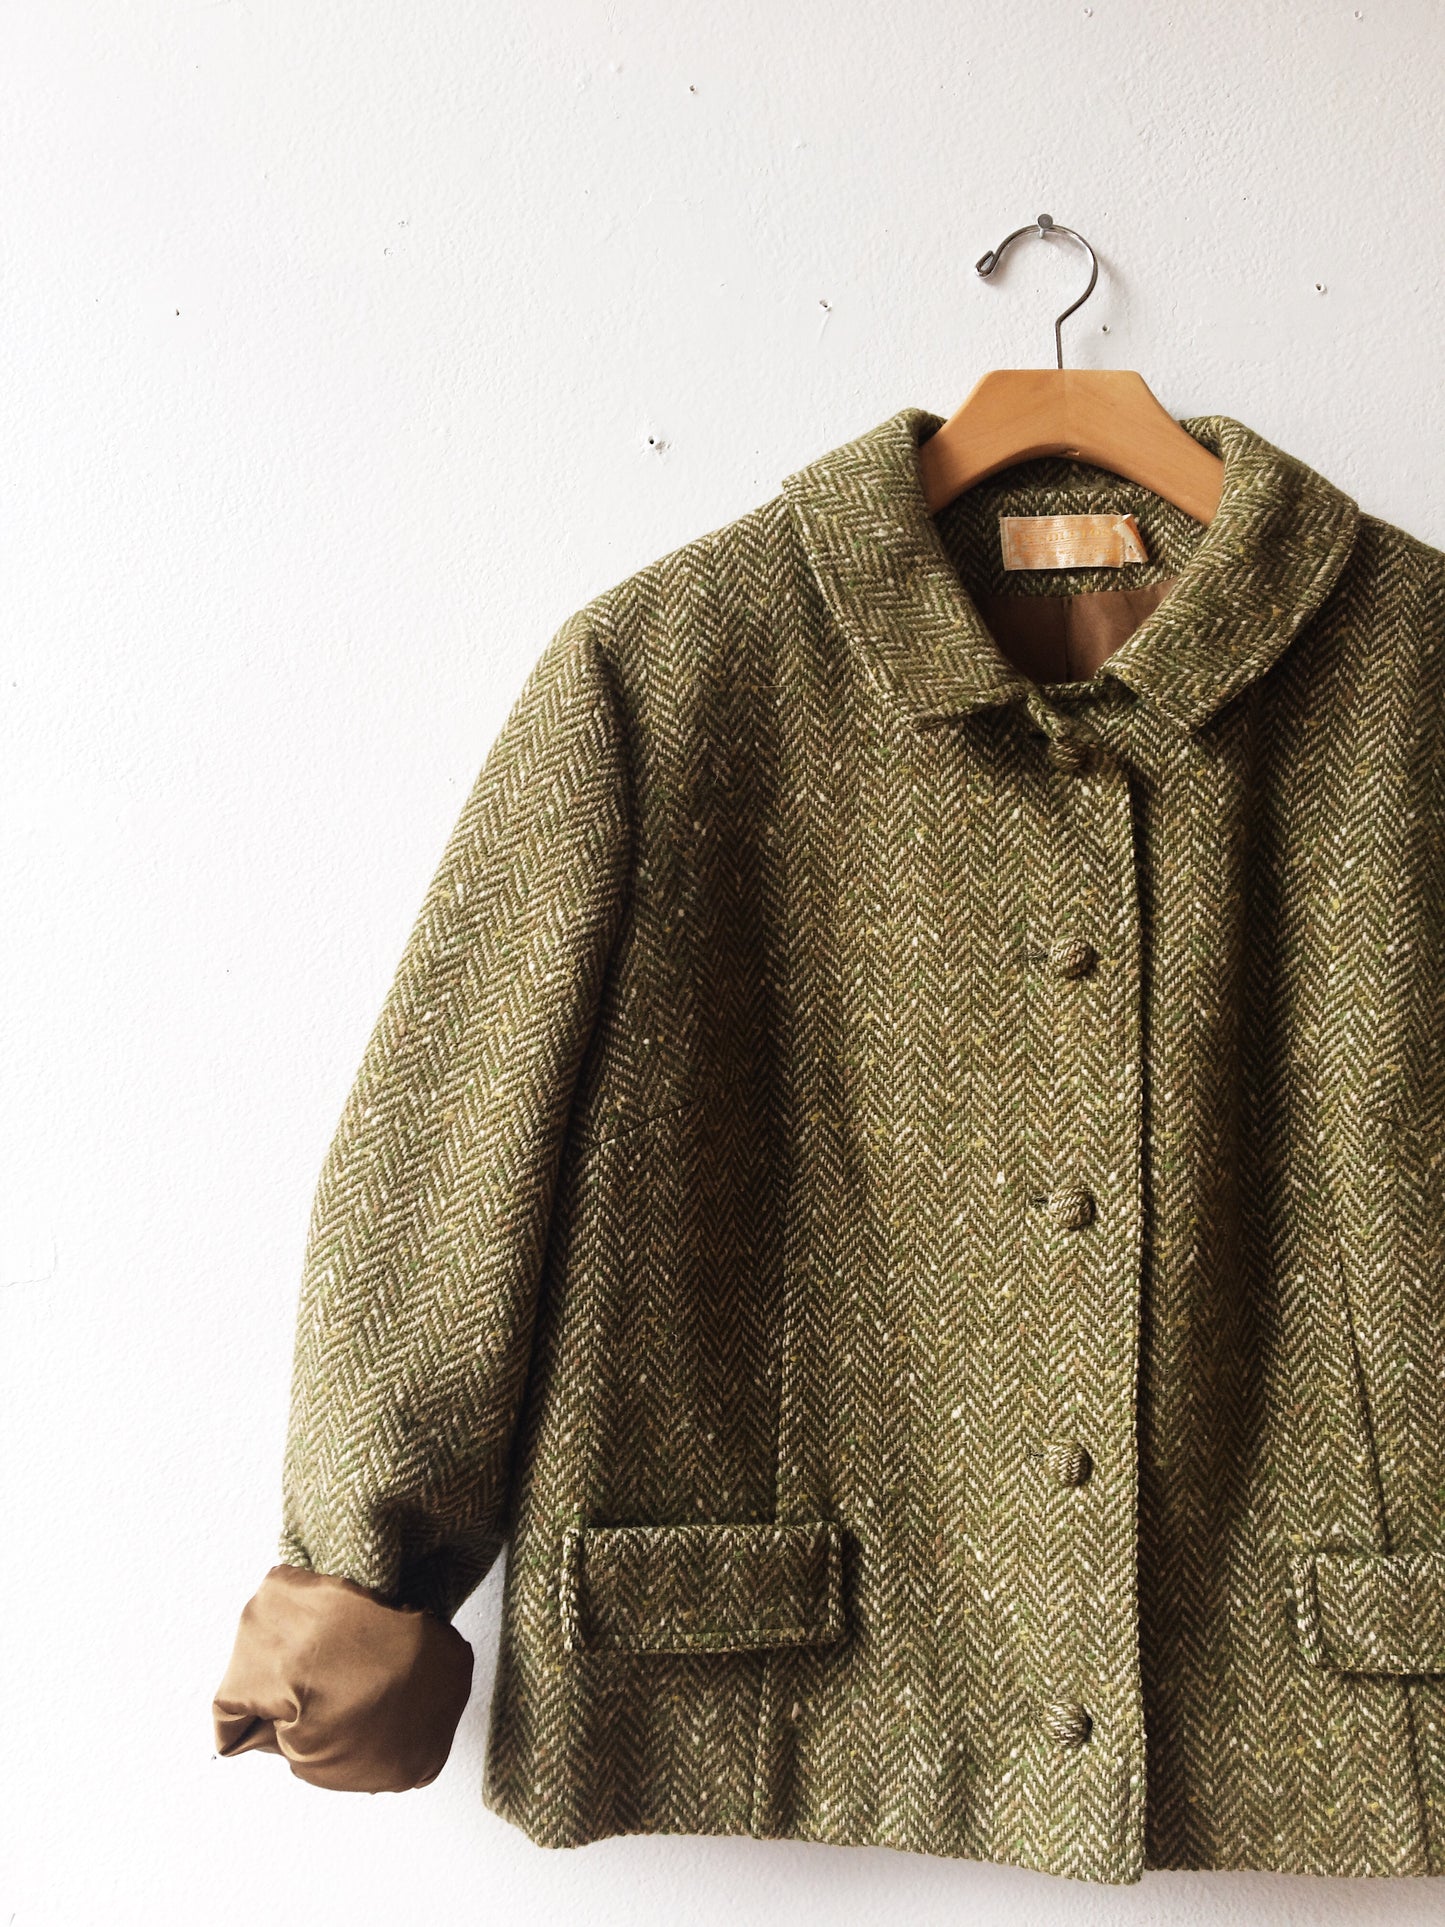 Vintage Pendleton Olive Tweed Jacket